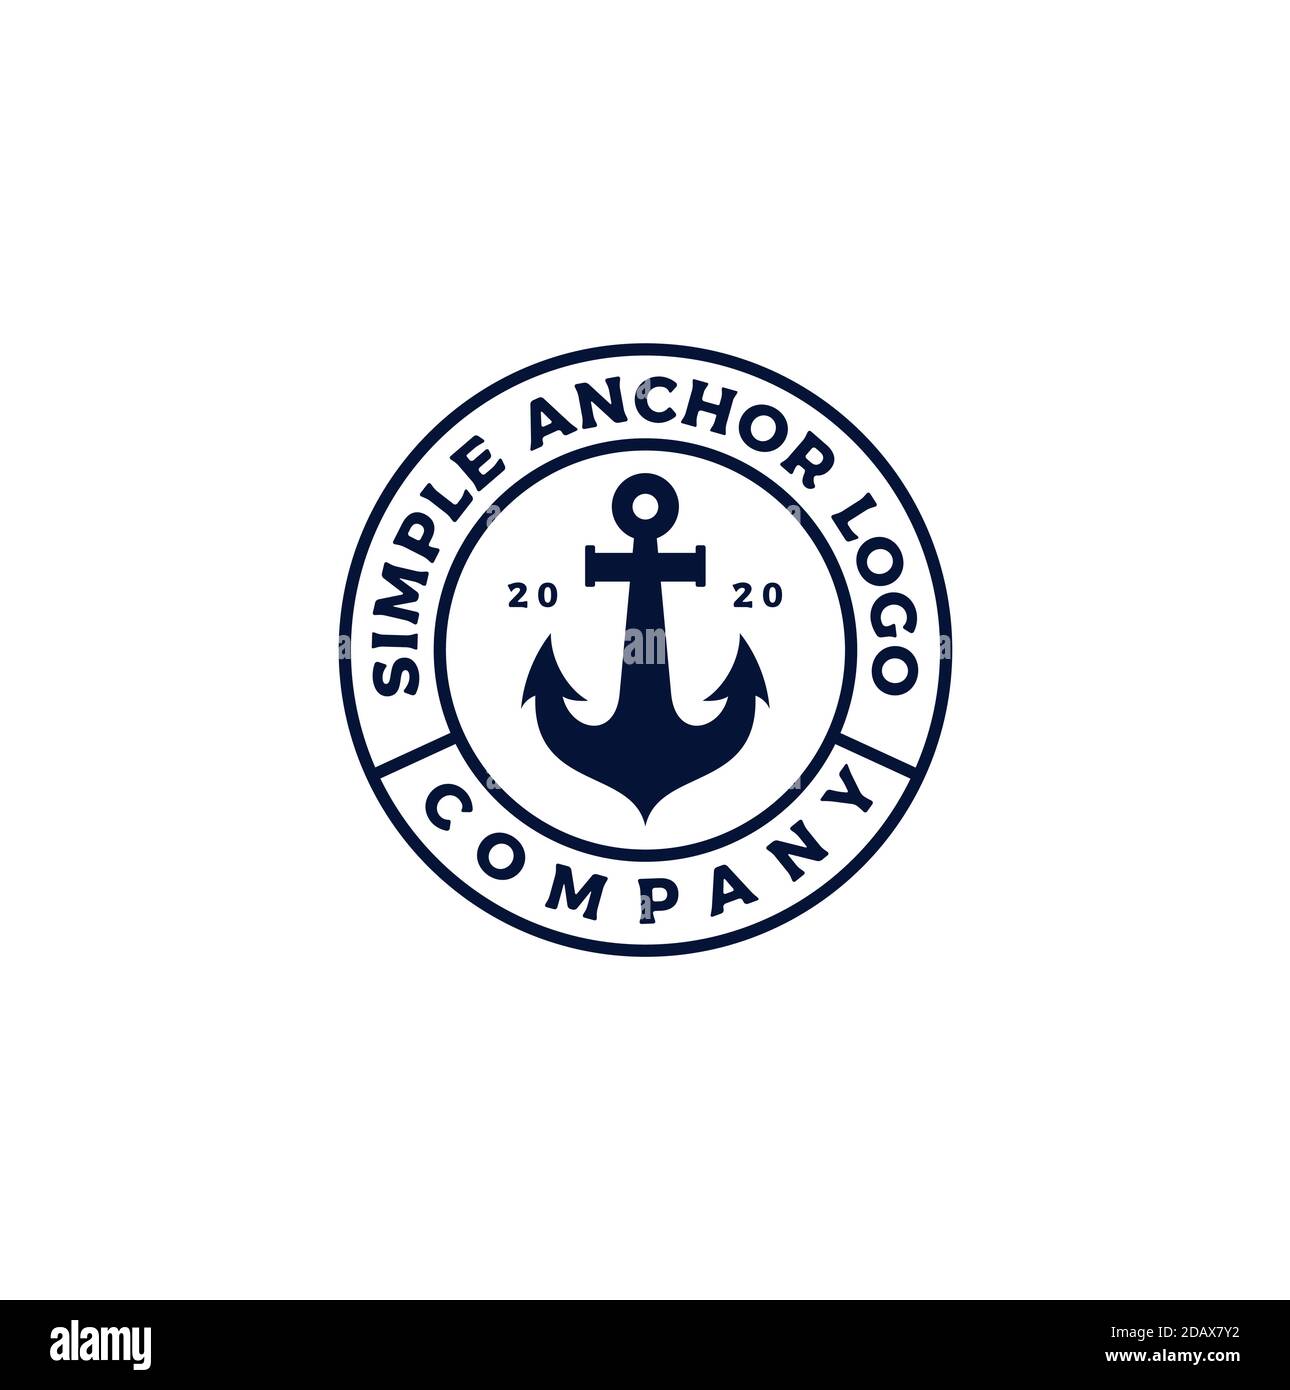 Silueta de ancla simple, sello retro vintage etiqueta insignia emblema diseño de logotipo para barco barco marina transporte náutico. Ilustración del Vector